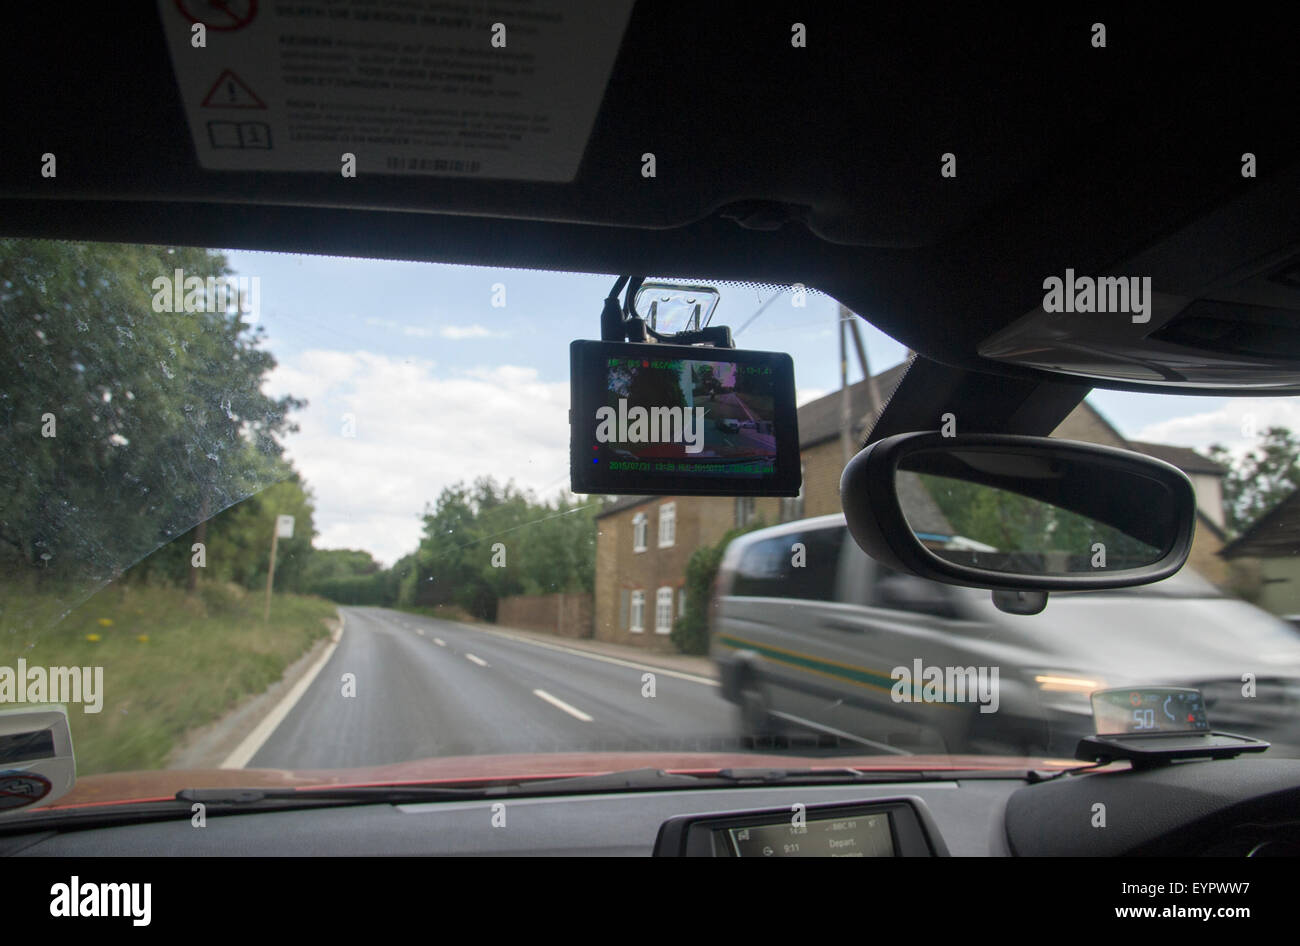 https://c8.alamy.com/comp/EYPWW7/dashcam-car-windscreen-video-camera-EYPWW7.jpg